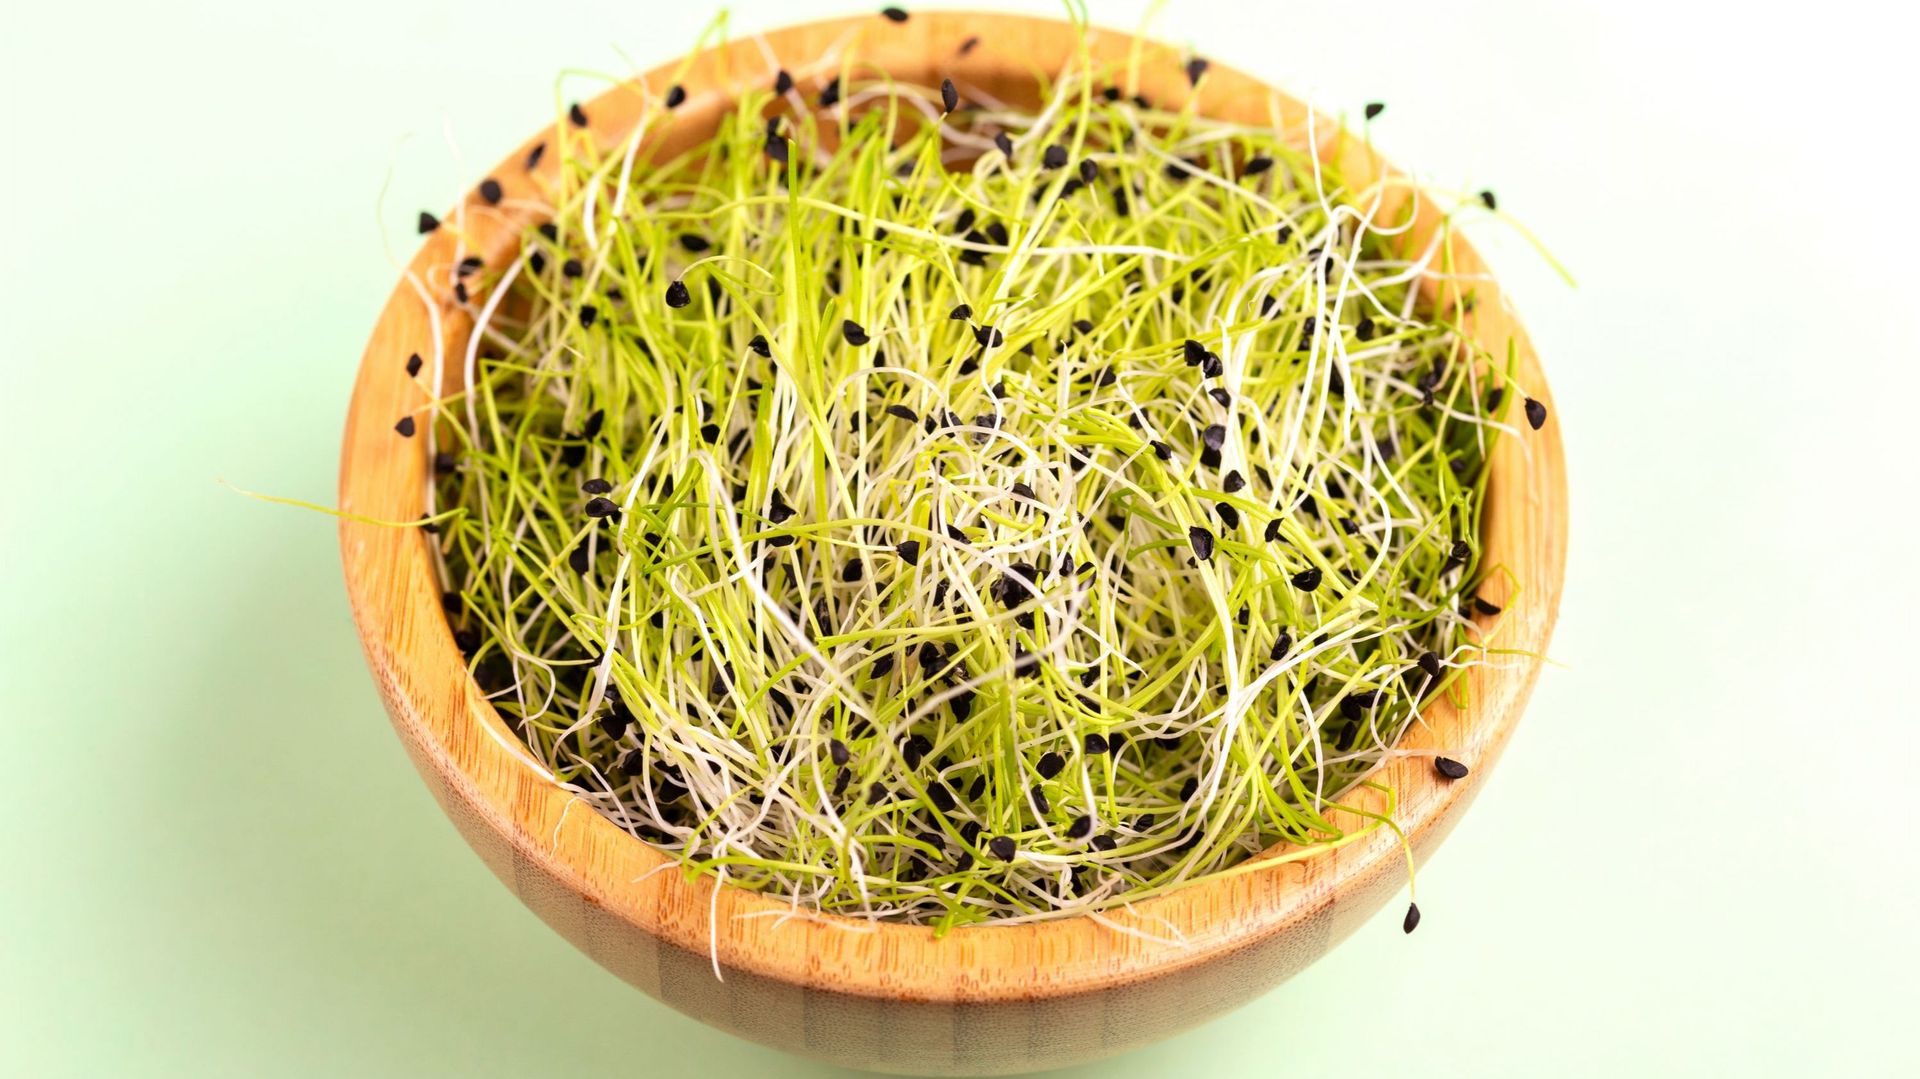 Fresh microgreen leek in wooden bowl on light green background